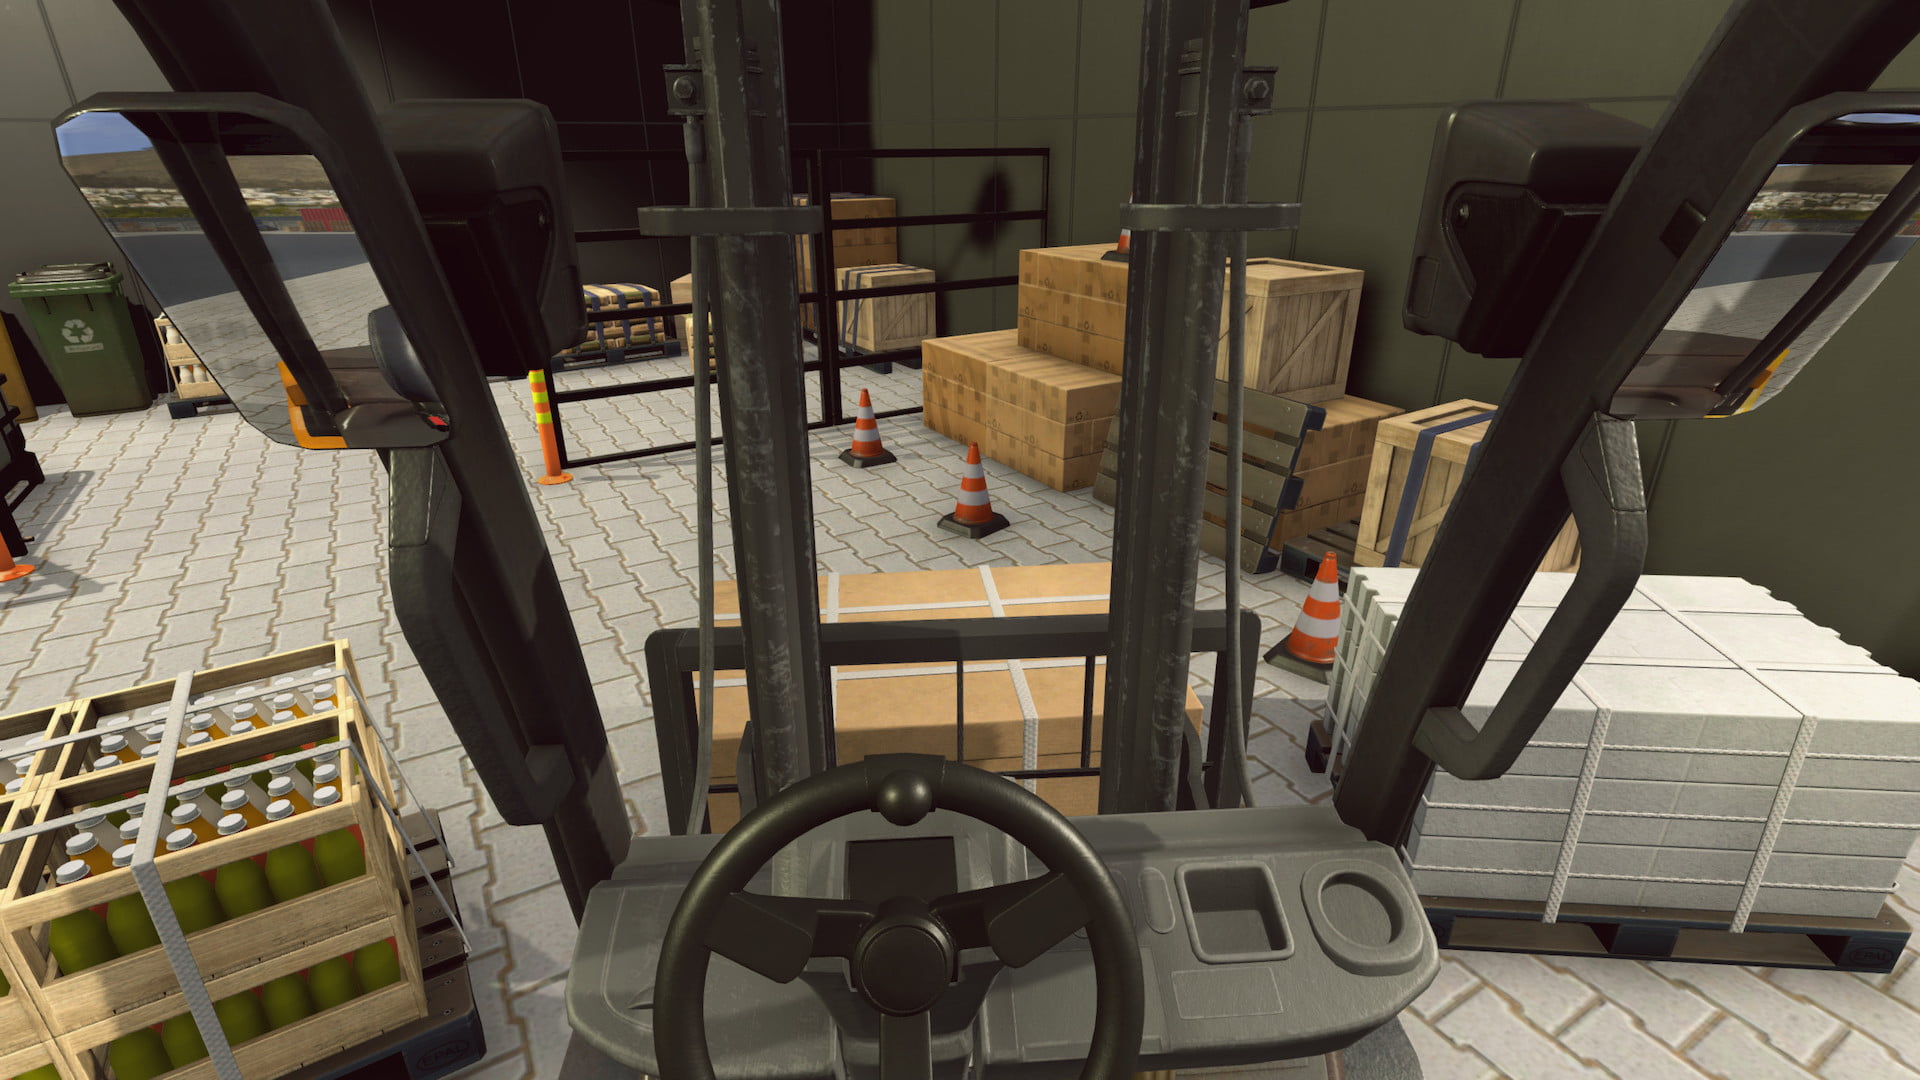 Forklift Driver VR: The VR simulation we needed and deserved